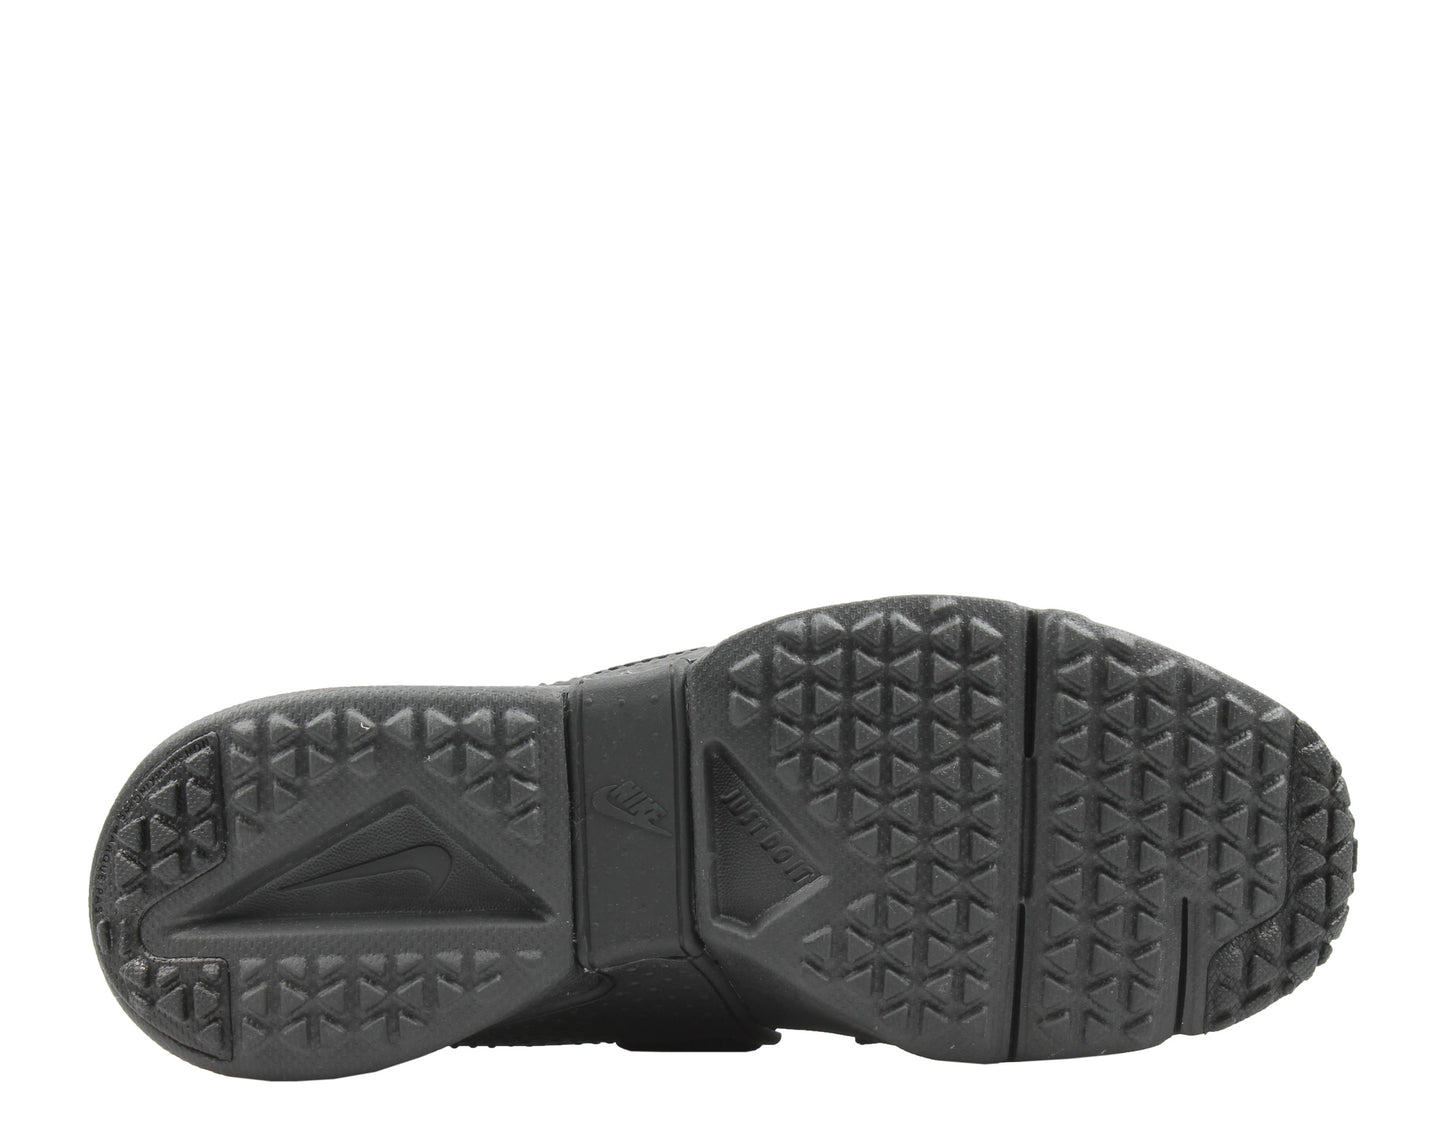 Nike Air Huarache Extreme (GS) Black/Black Big Kids Running Shoes AQ0575-004